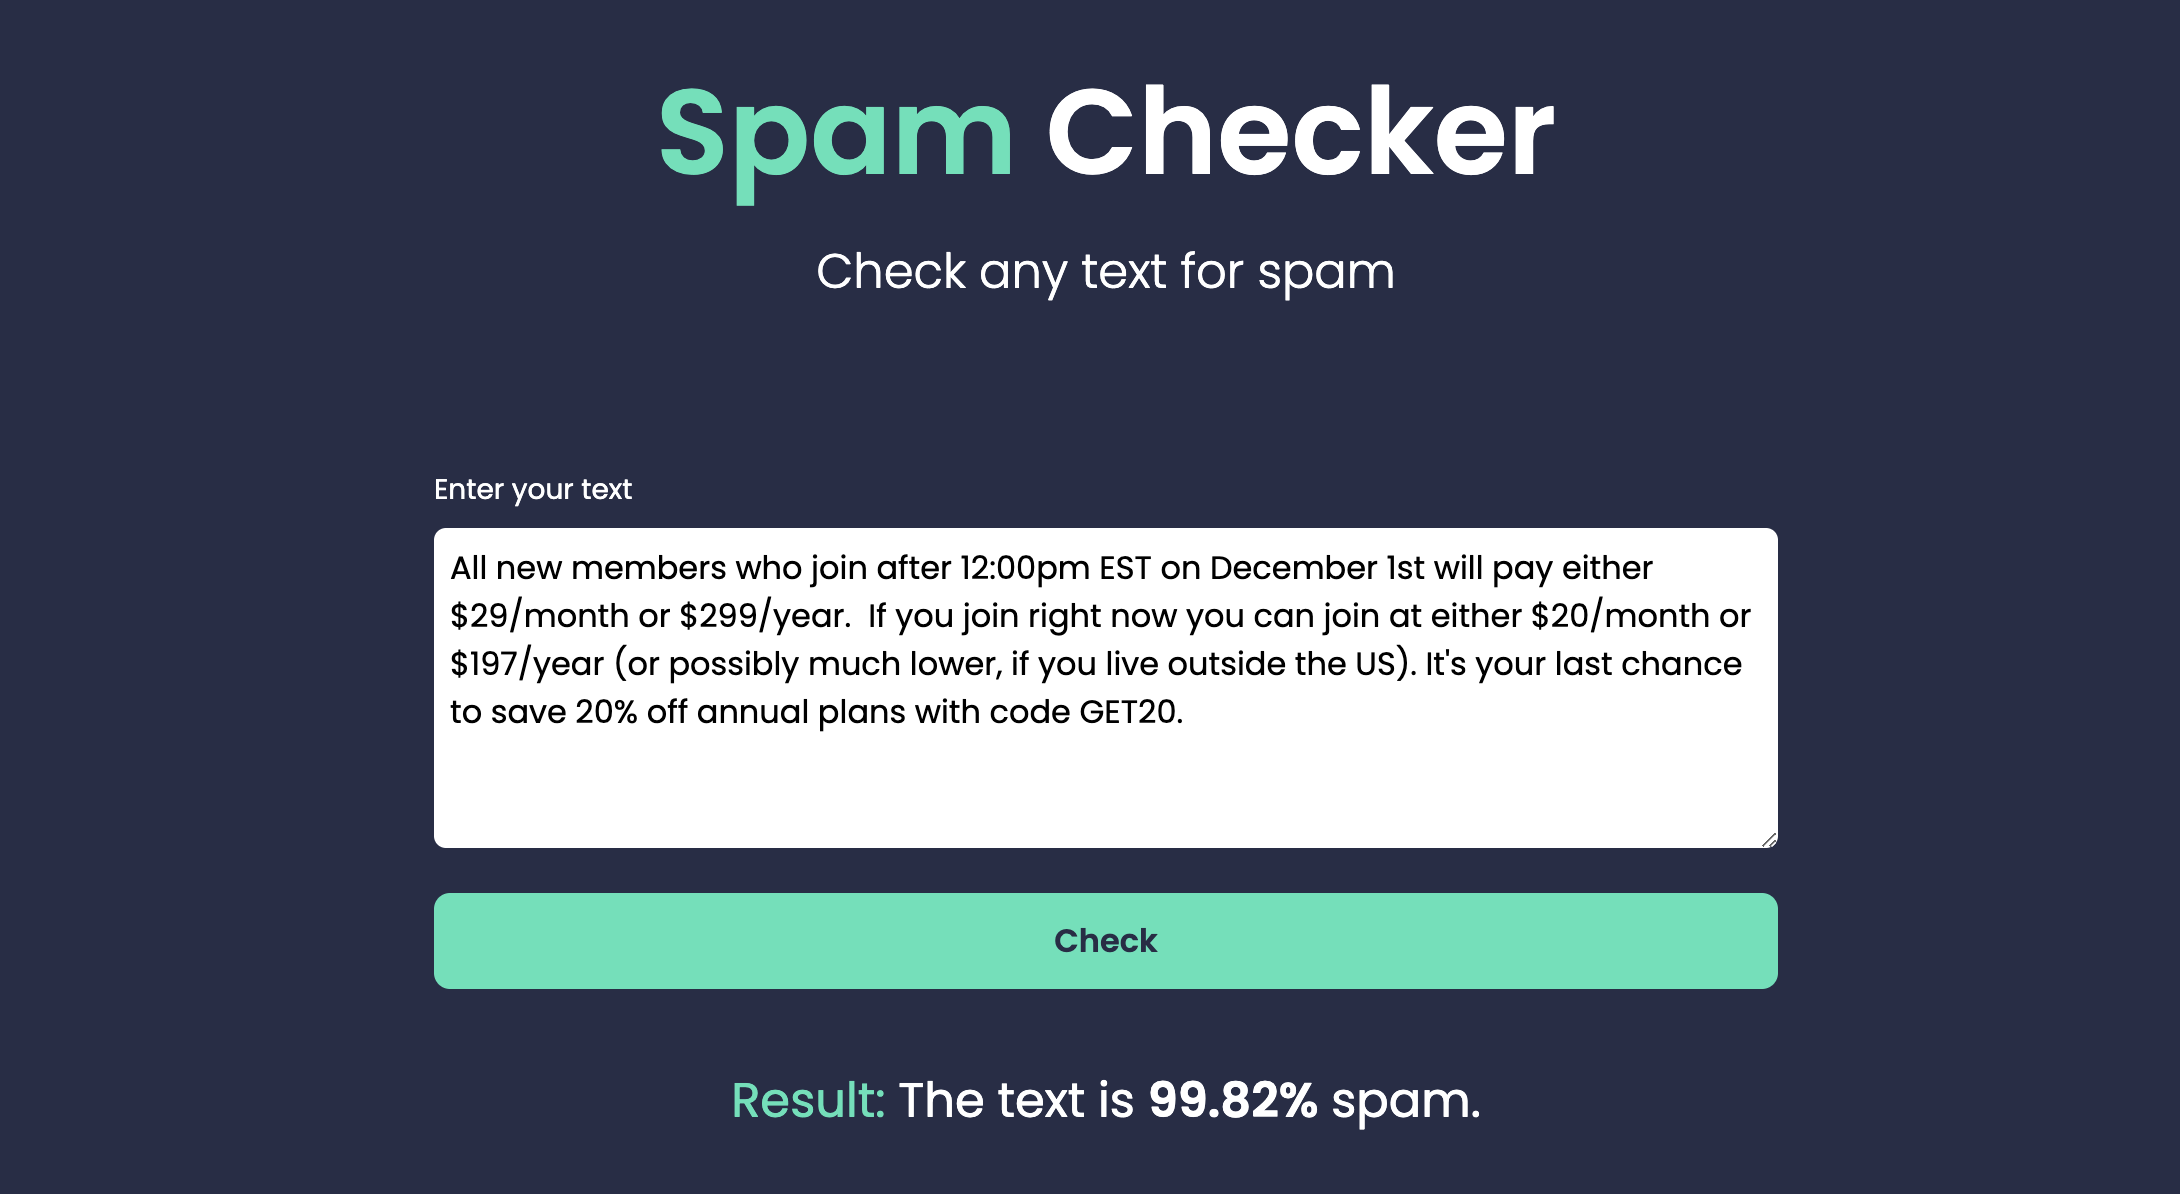 Spam checker app